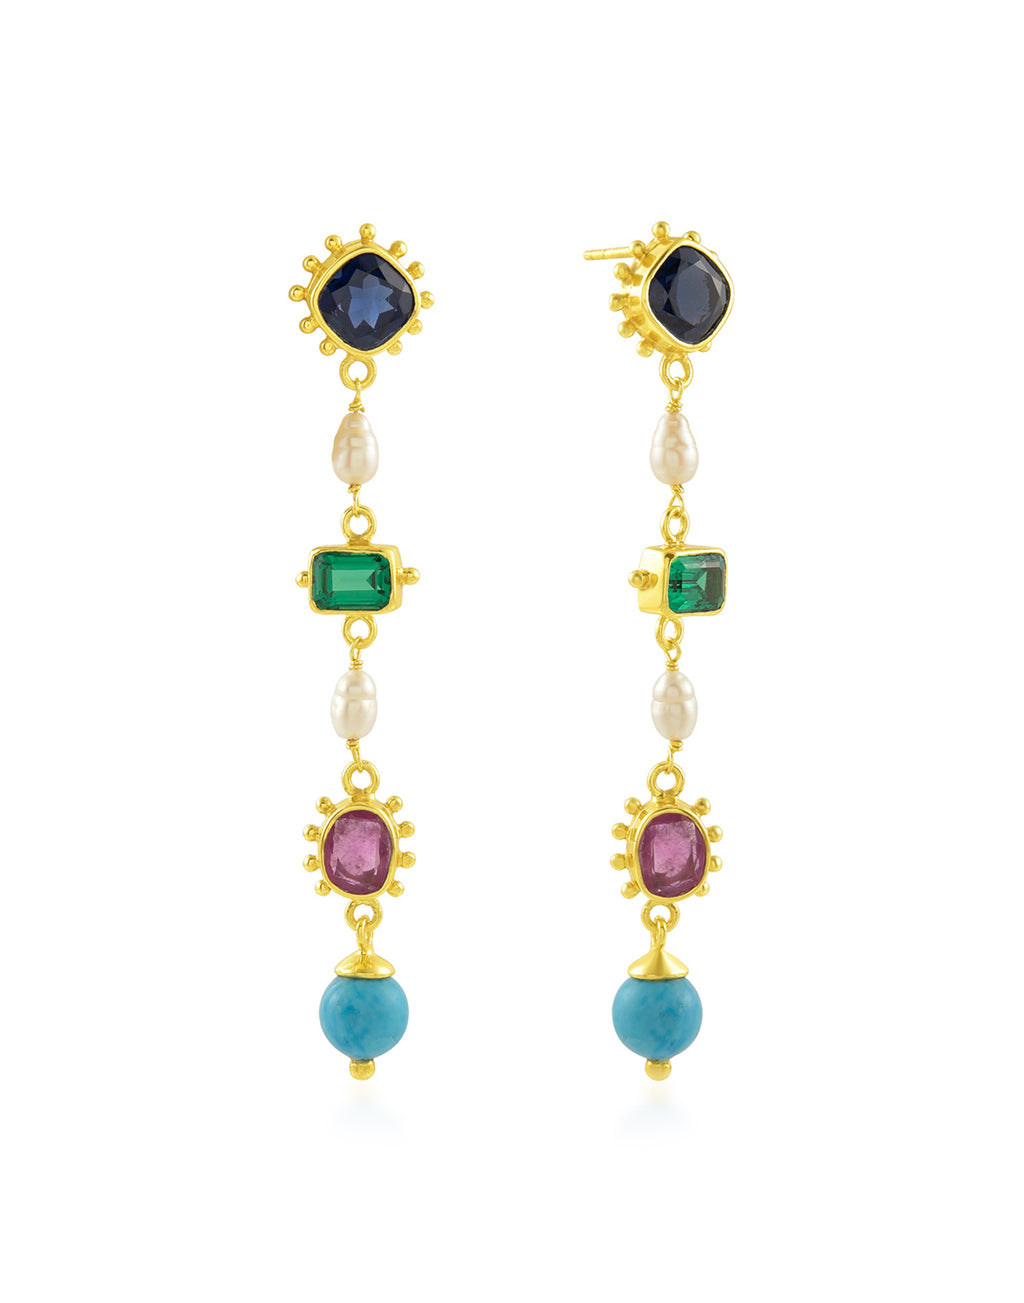 Multicolour Gemstone Danglers - Statement Earrings - Gold-Plated & Hypoallergenic Jewellery - Made in India - Dubai Jewellery - Dori